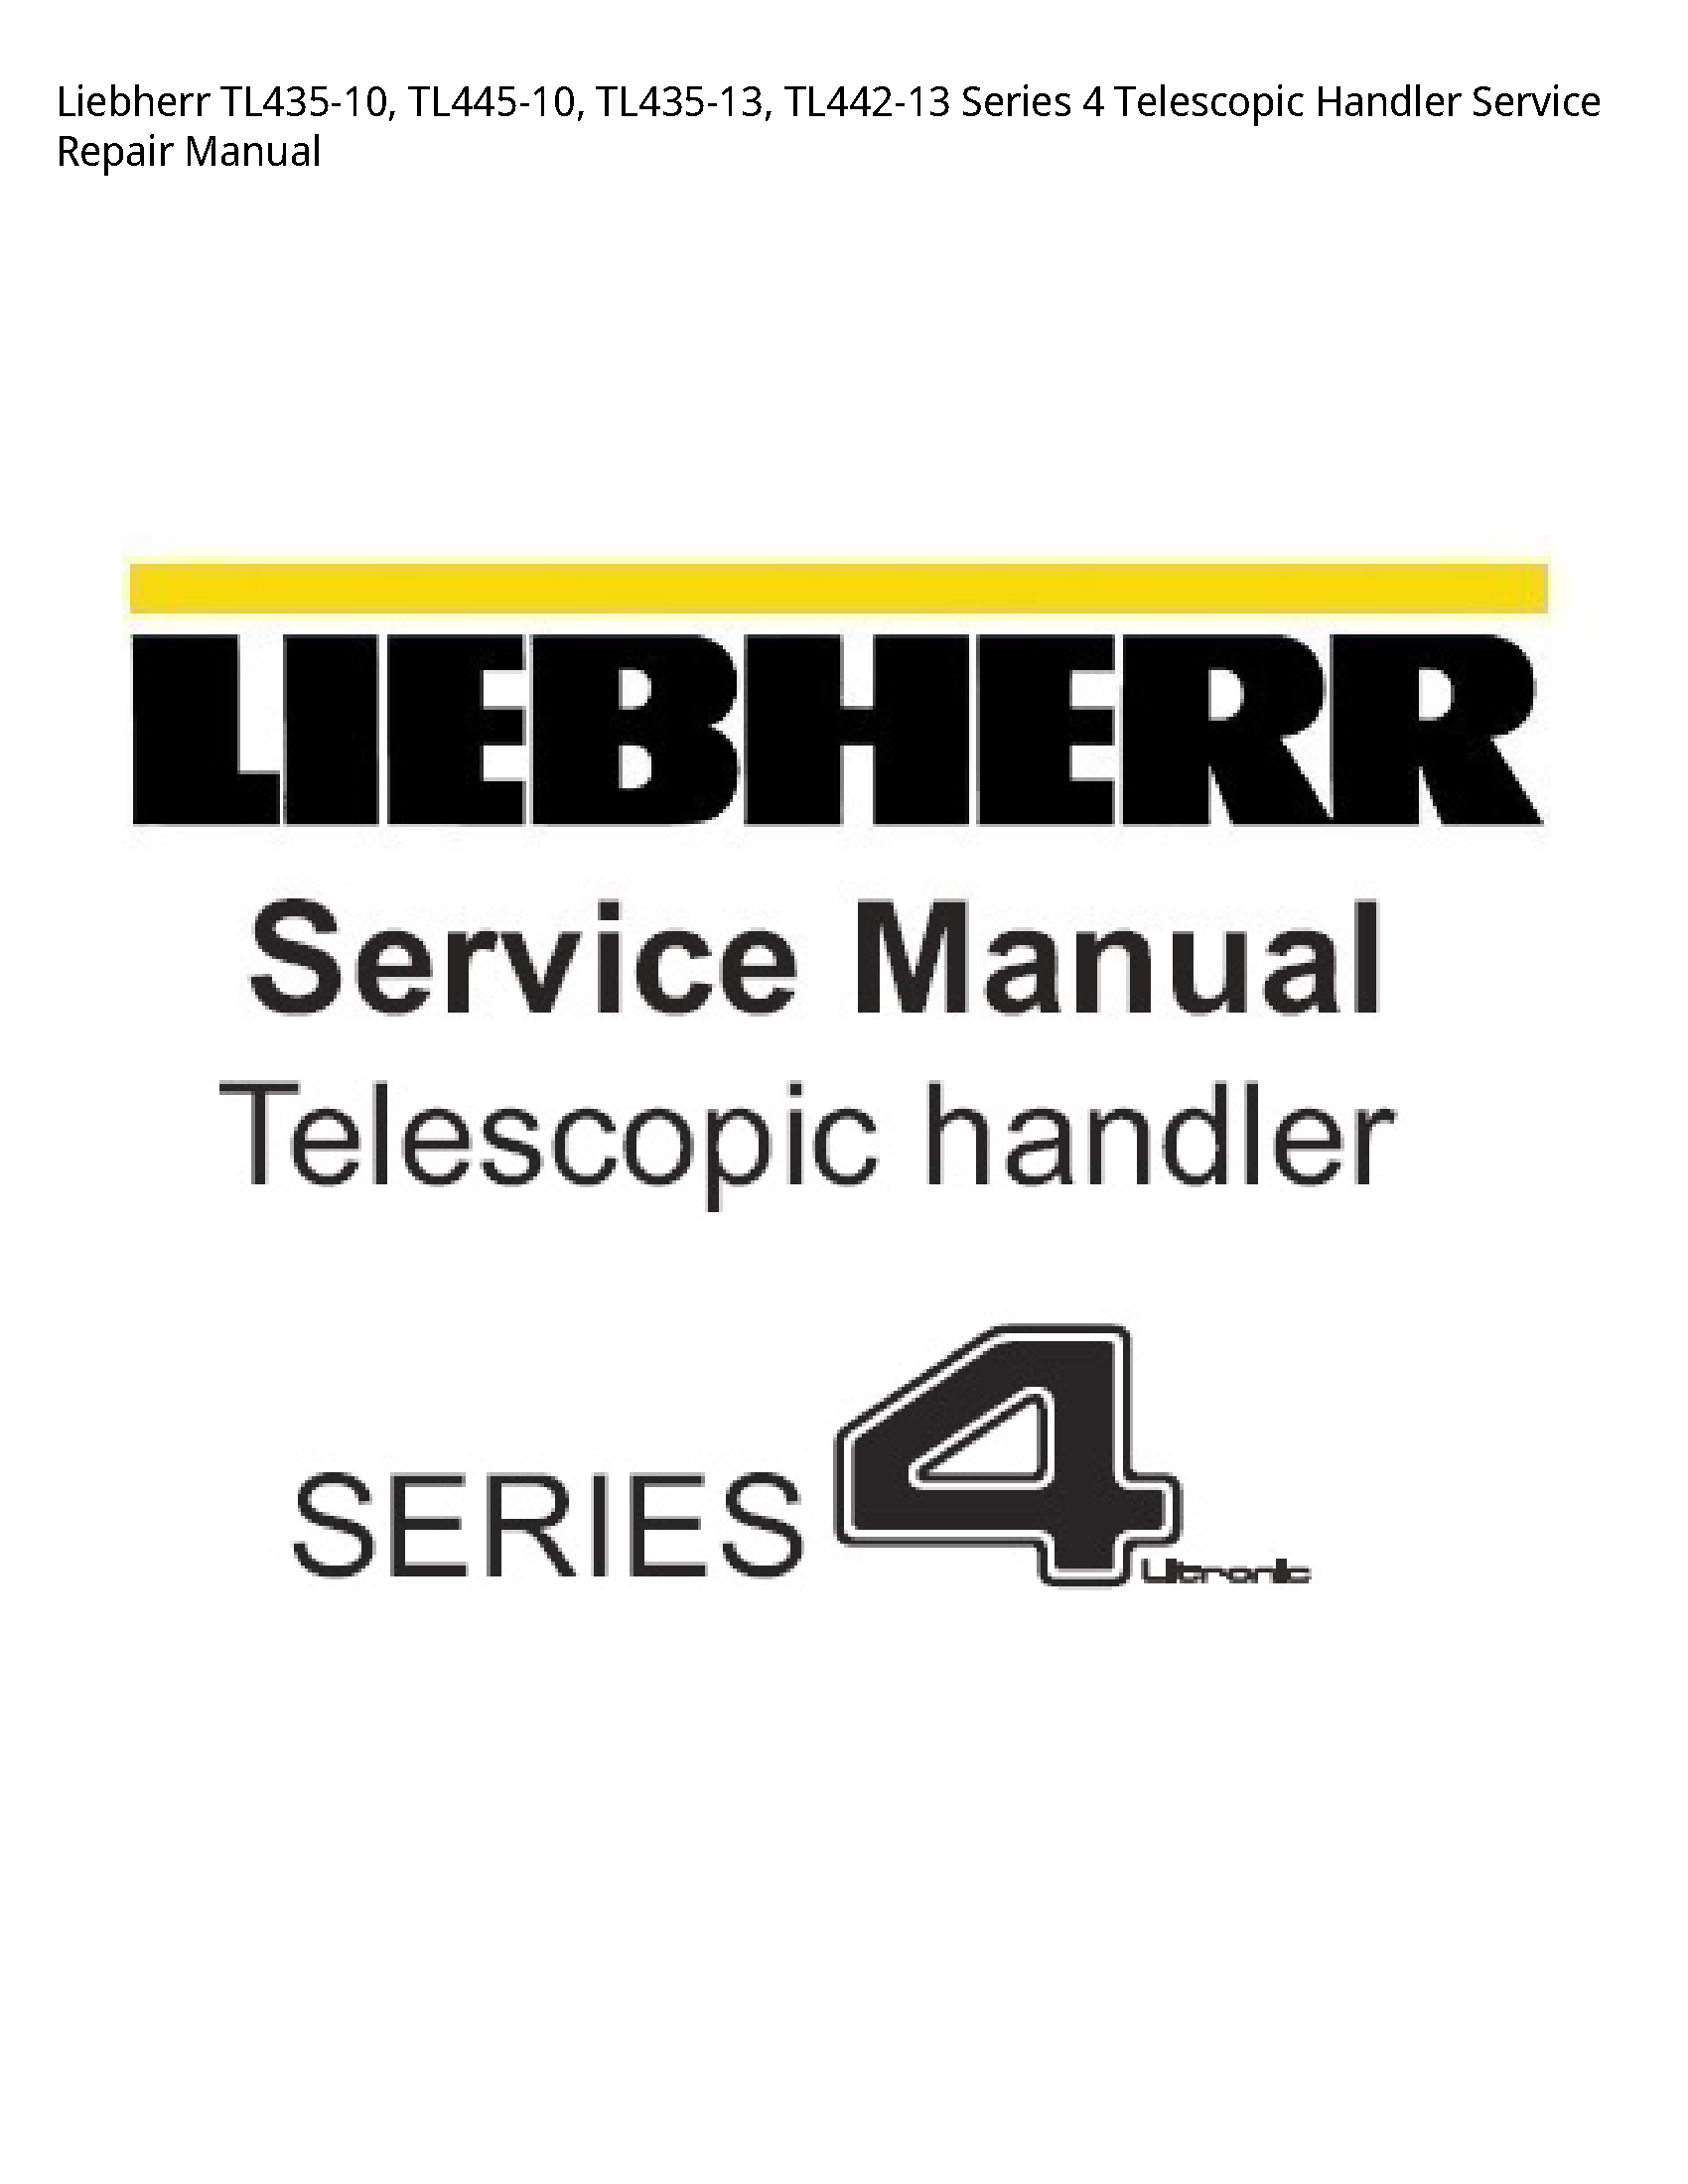 Liebherr TL435-10 Series Telescopic Handler manual